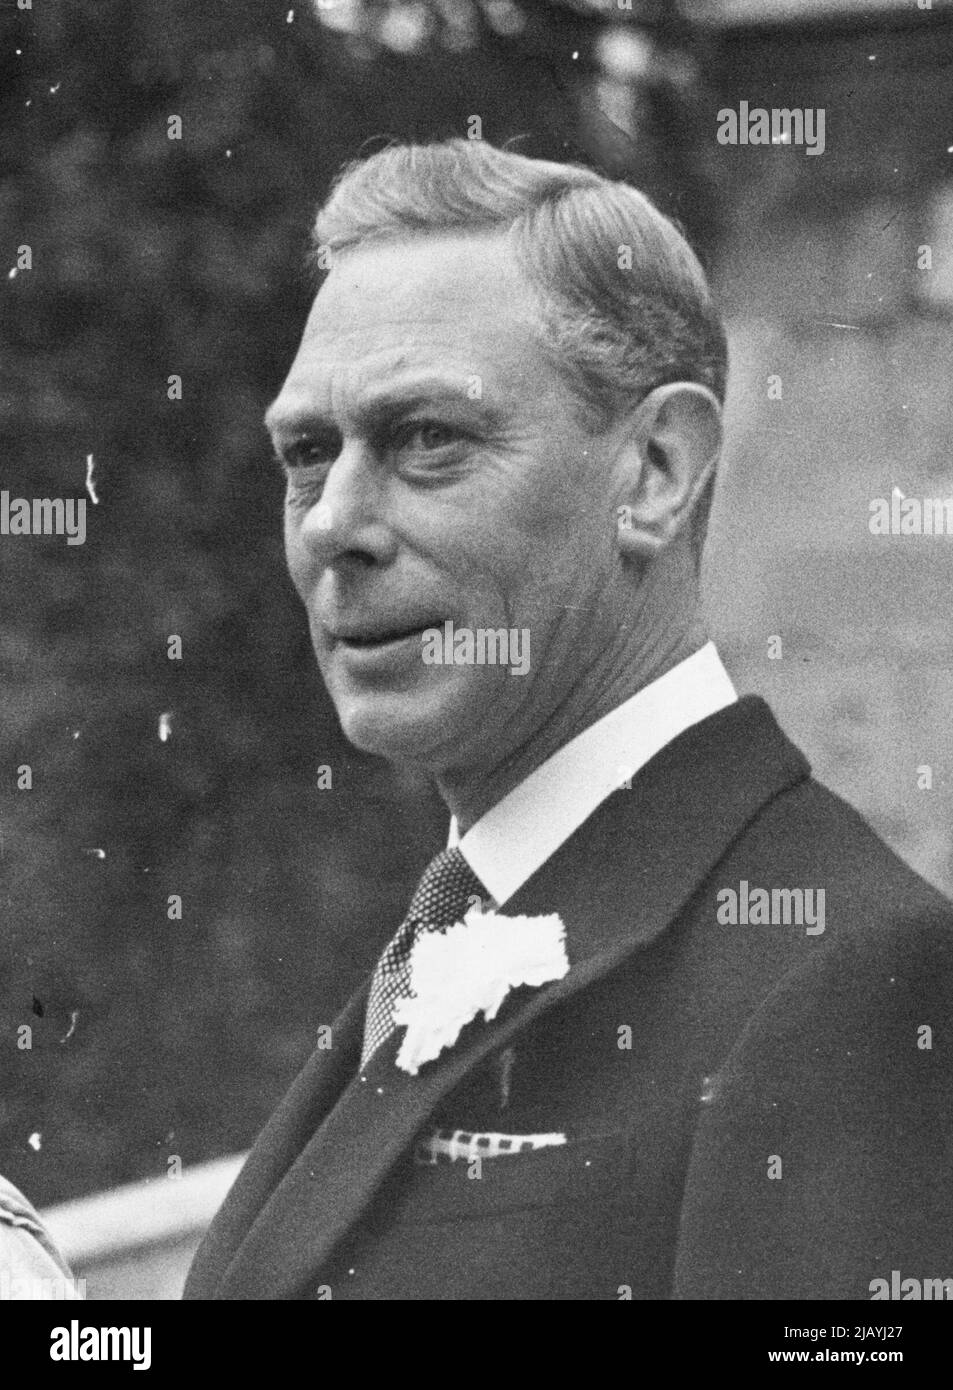 König George VI. Fotografiert am 21.. Mai. 1949. 6. Februar 1952. (Foto von Daily Mirror). Stockfoto